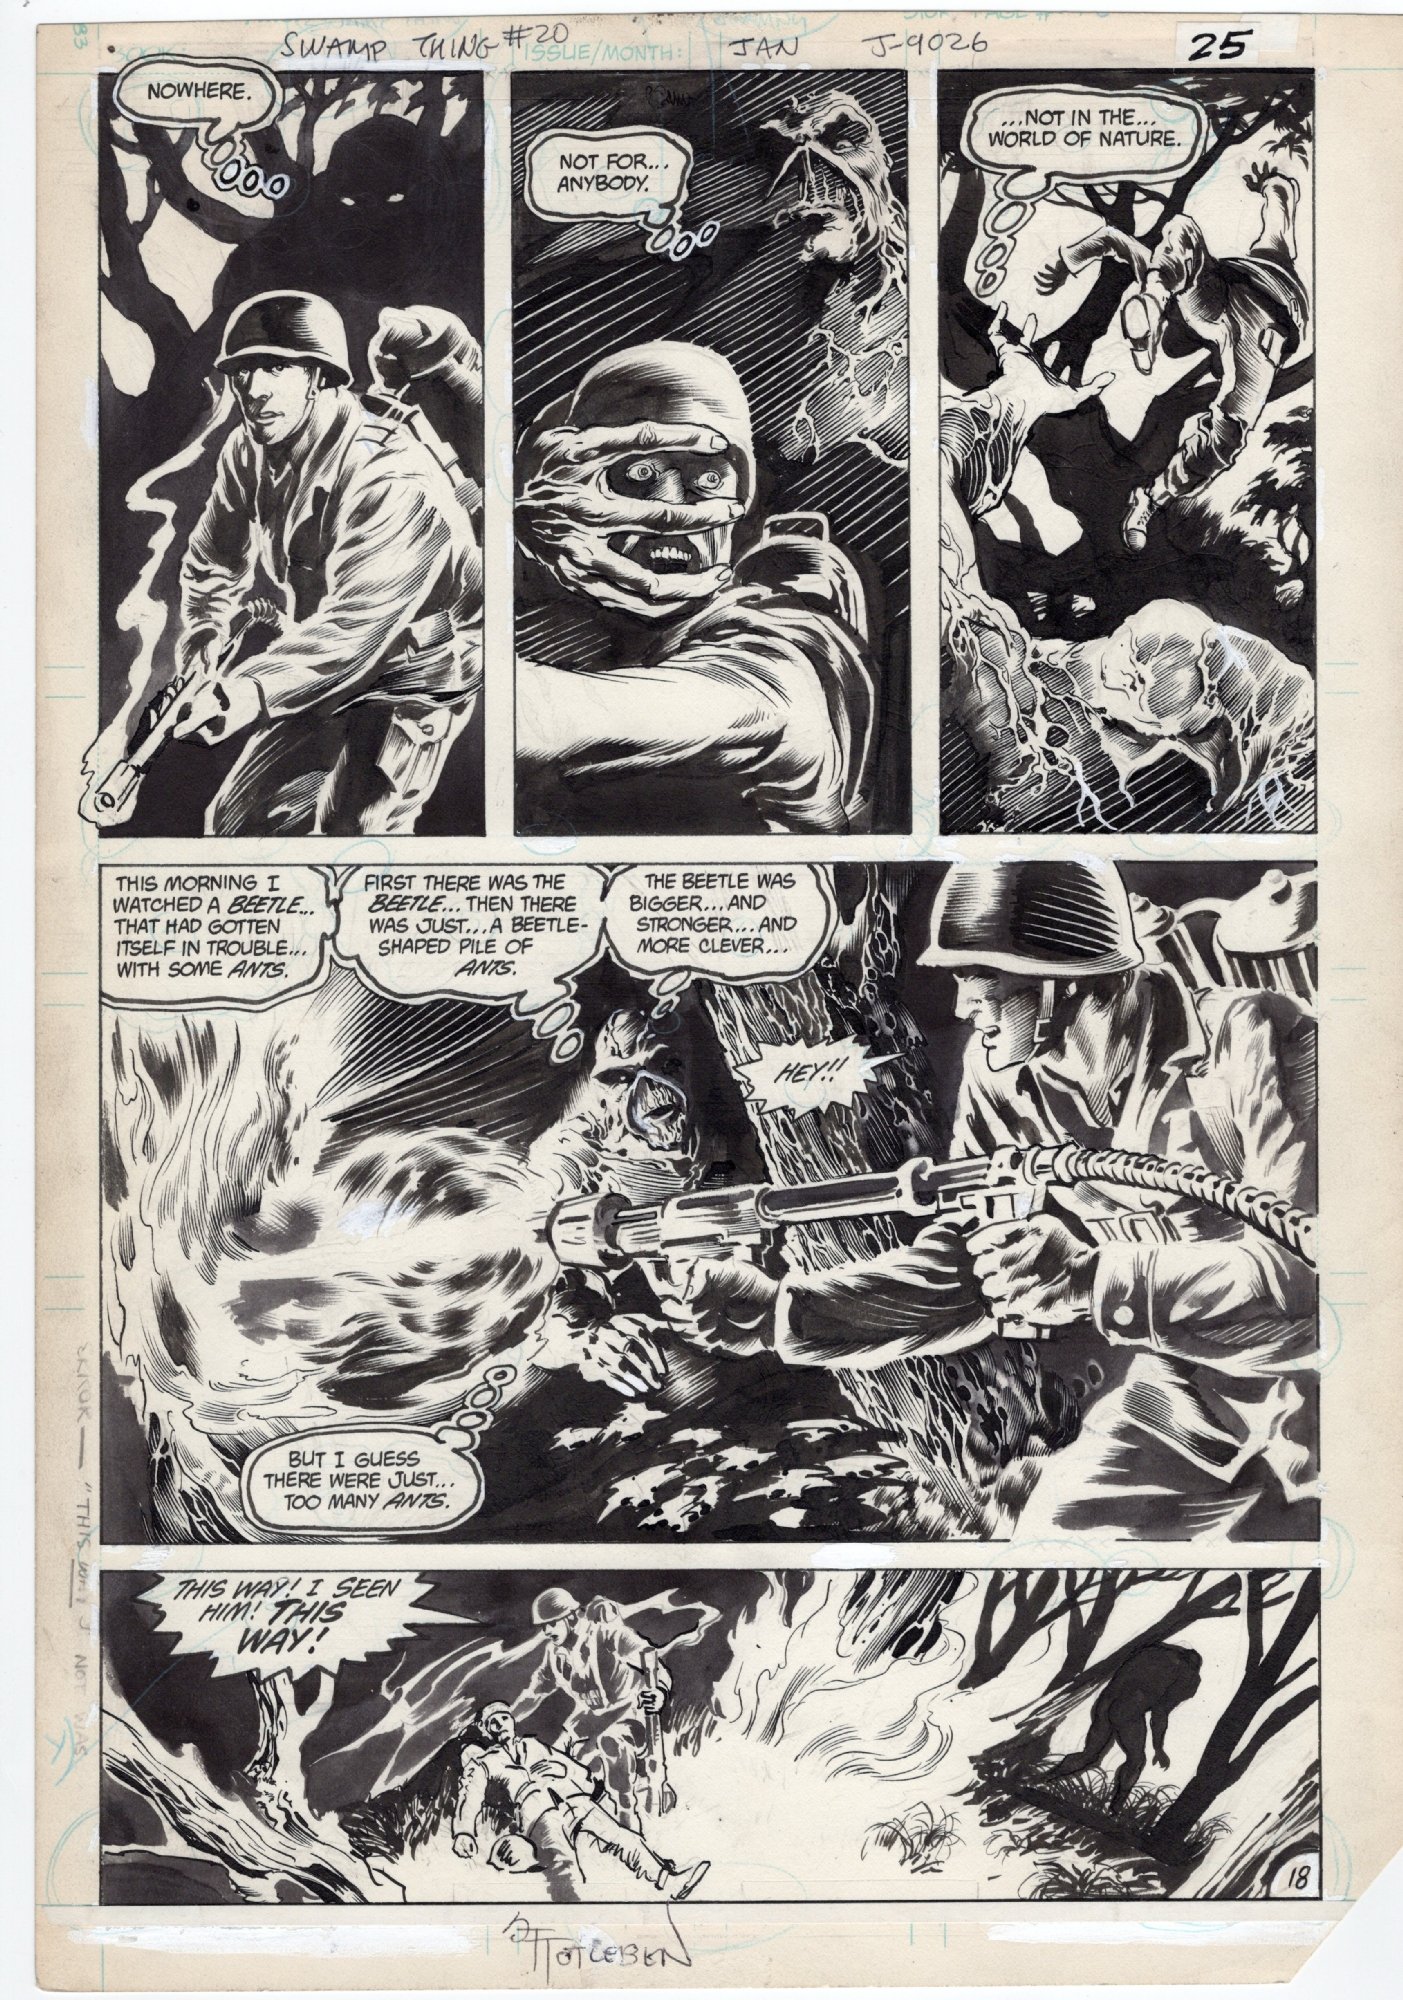 Blue Beetle (1985) #1 - First Printing - Comic Book - RARE - DC